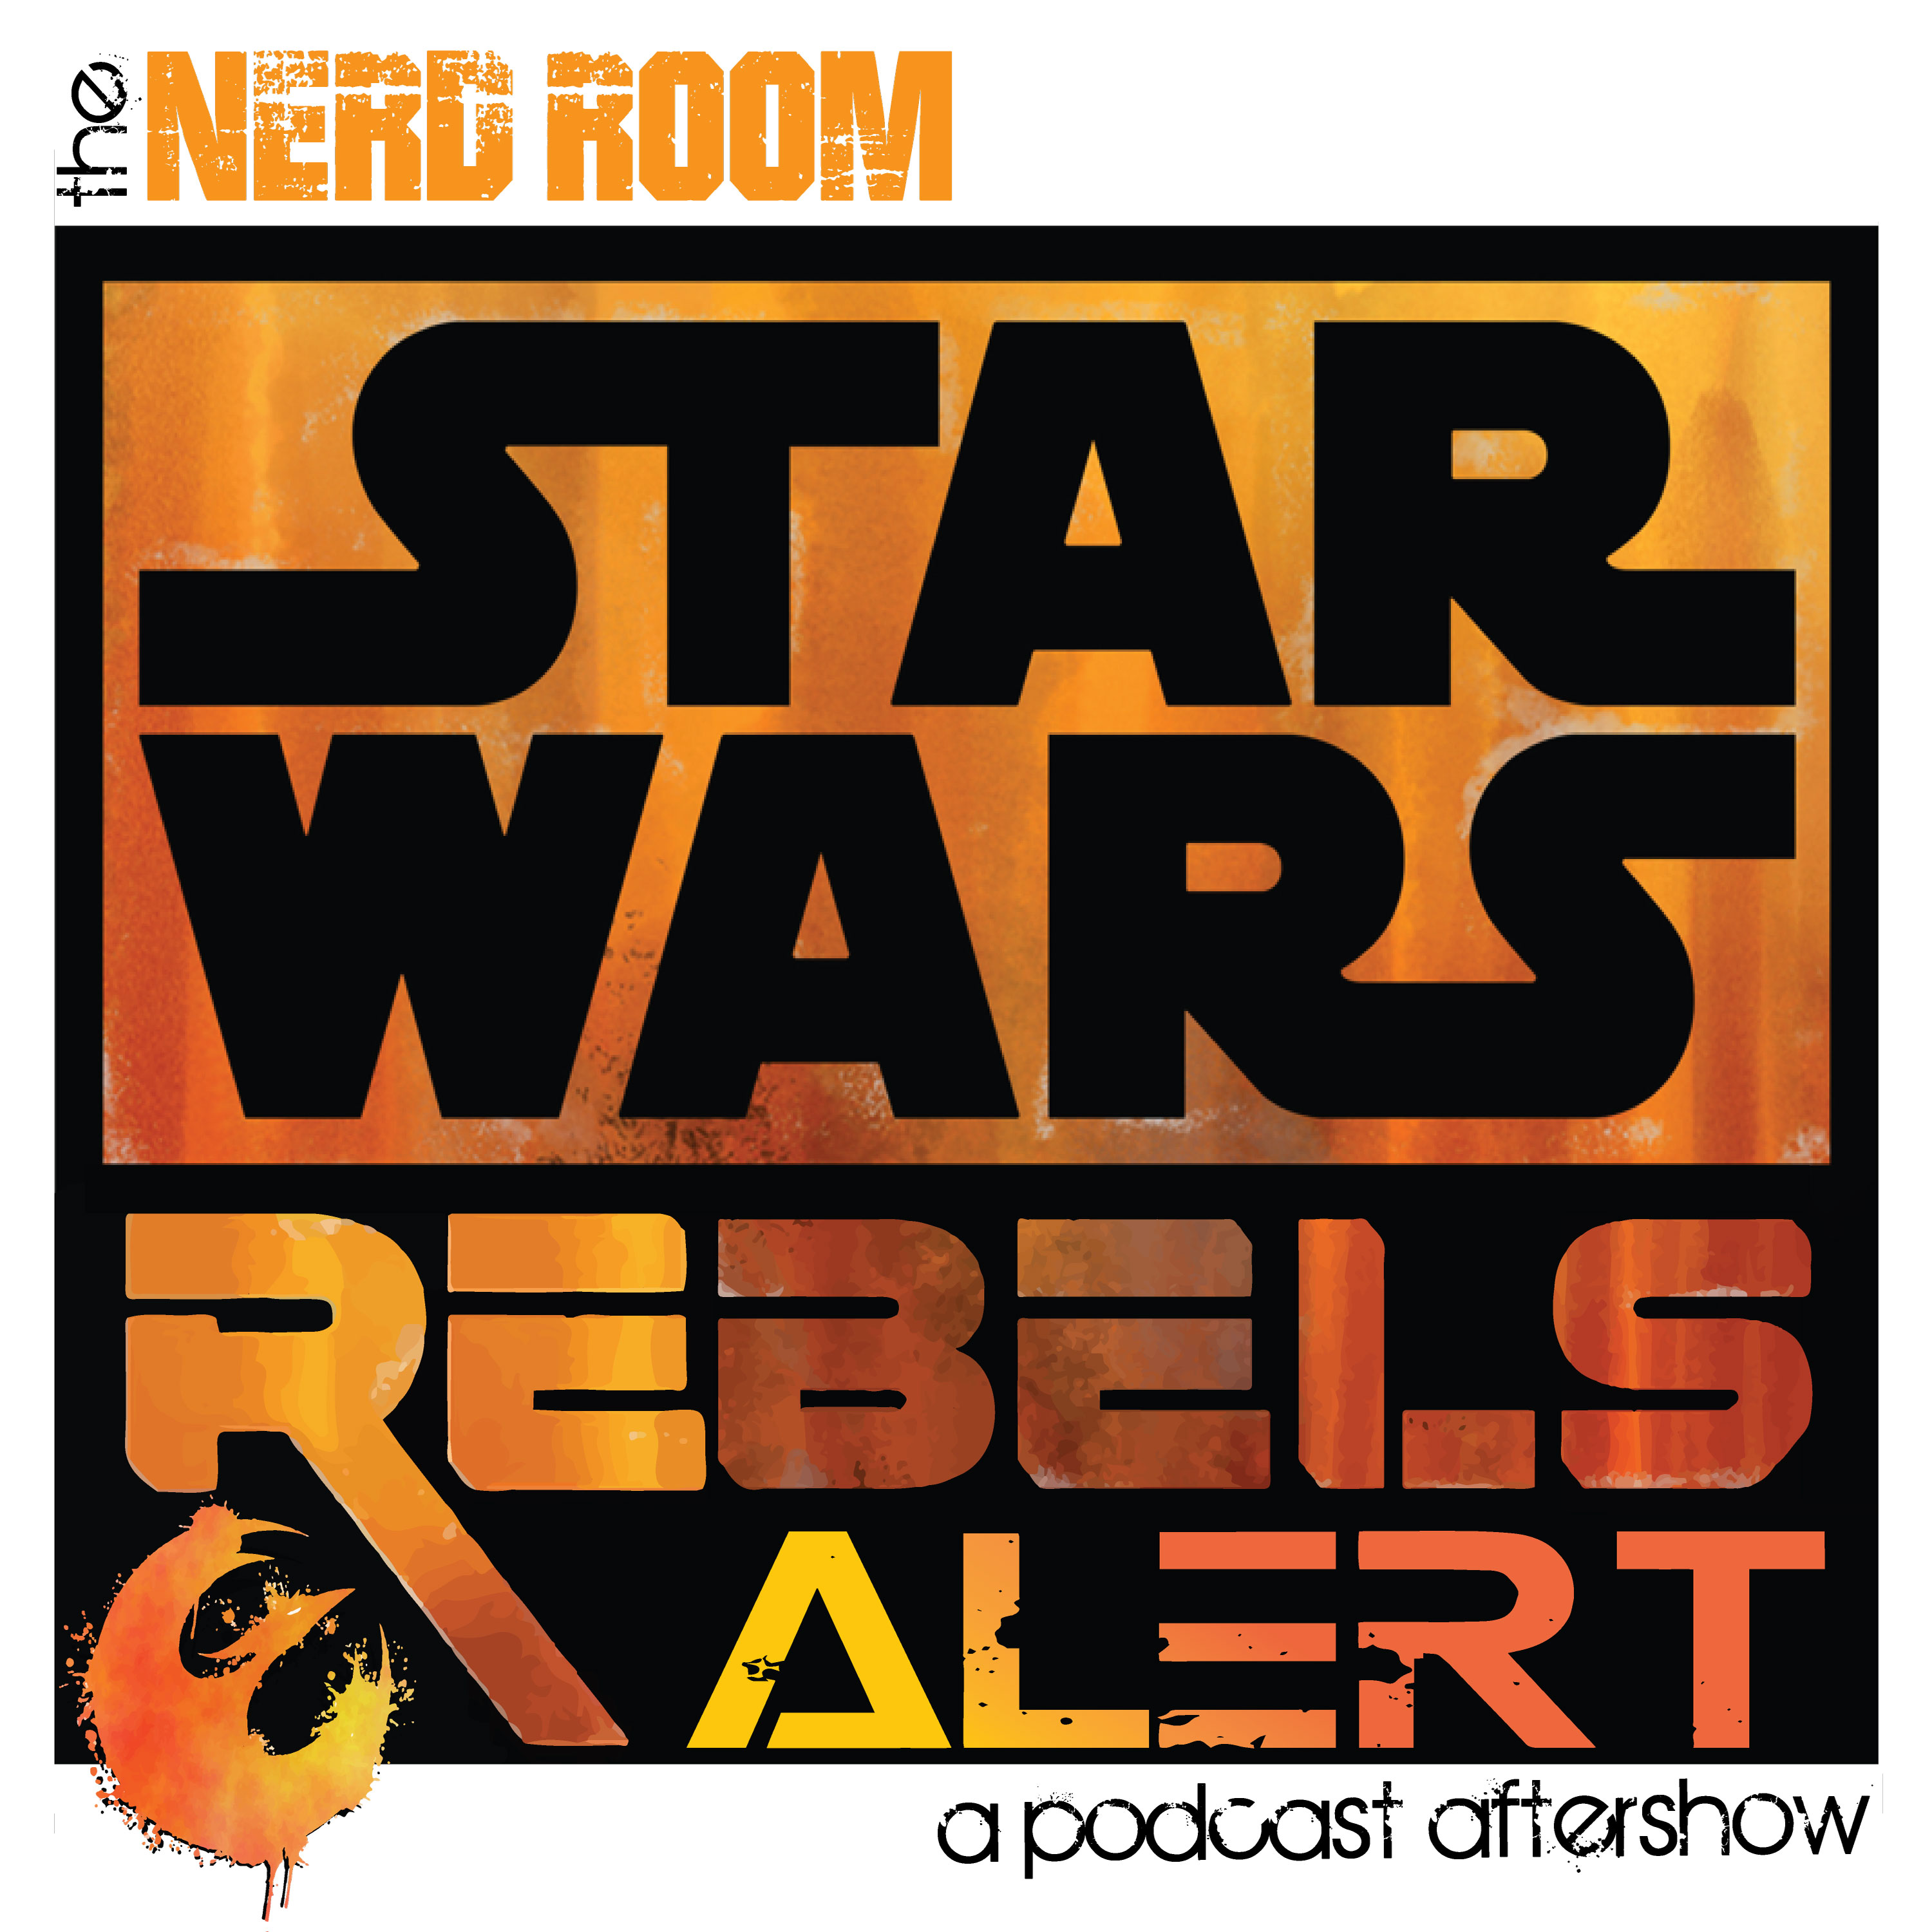 SW Rebels Alert - Star Wars: Ahsoka Review